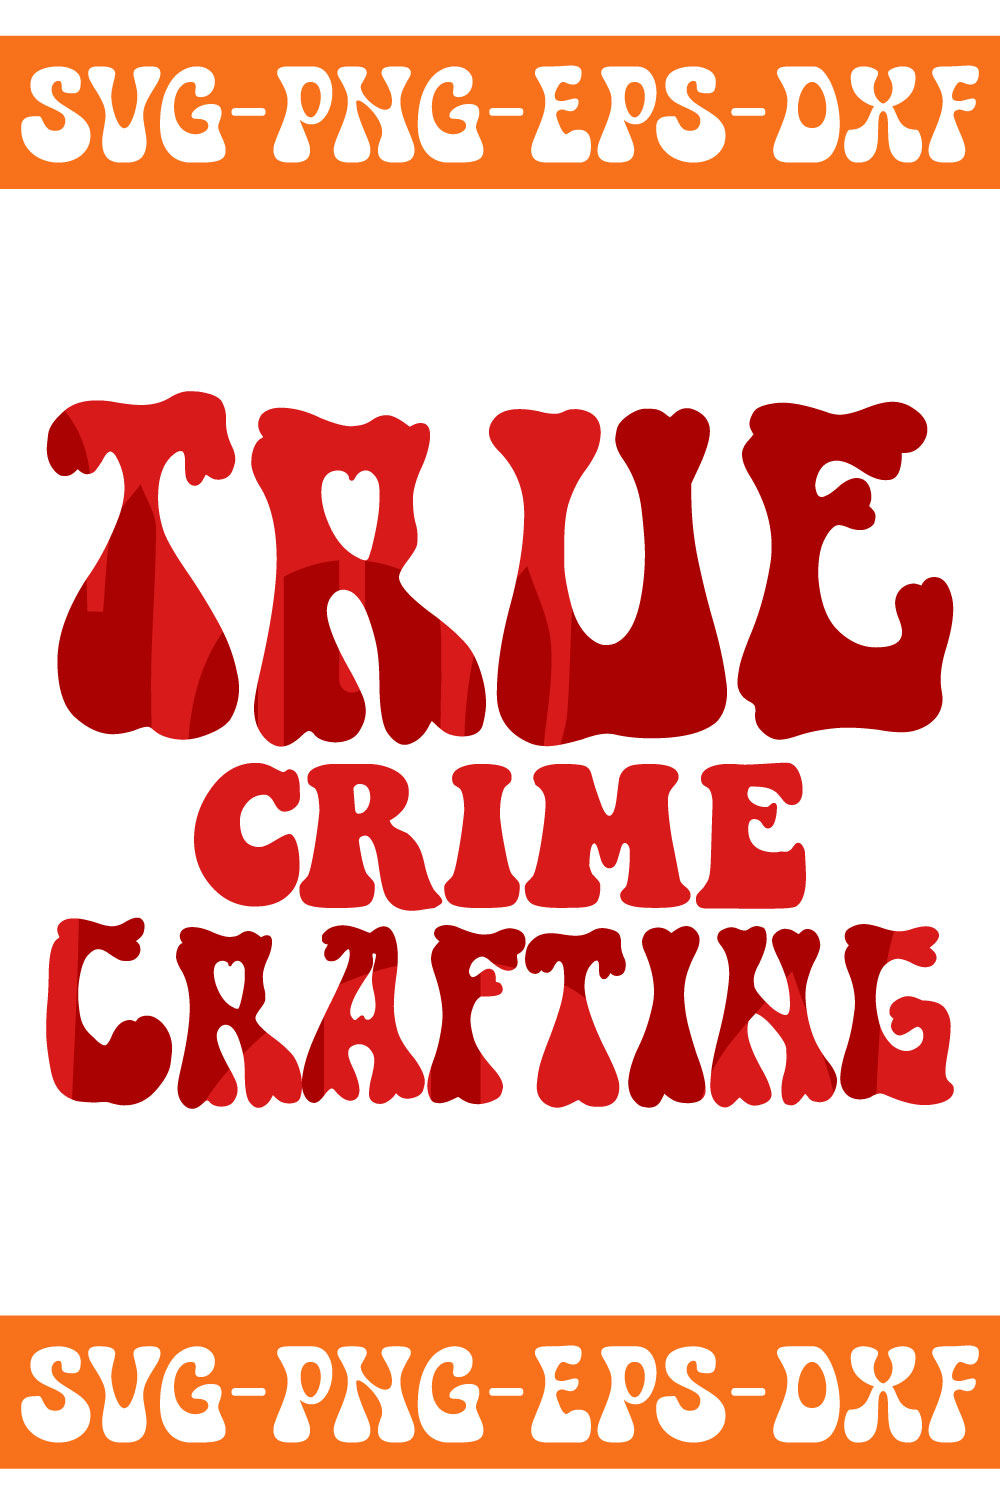 True-Crime Retro Svg pinterest preview image.